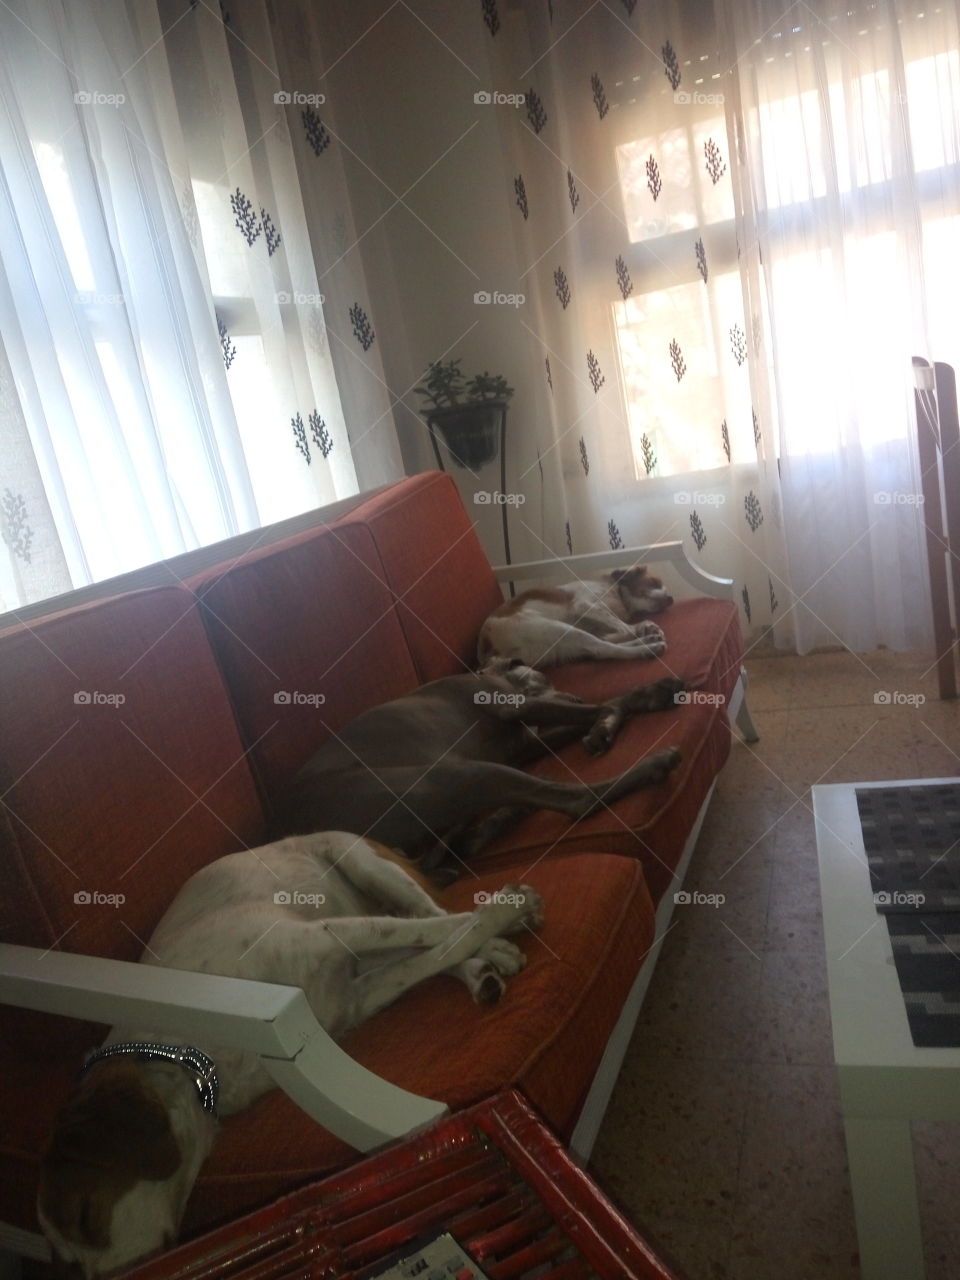 My sleeping dogs